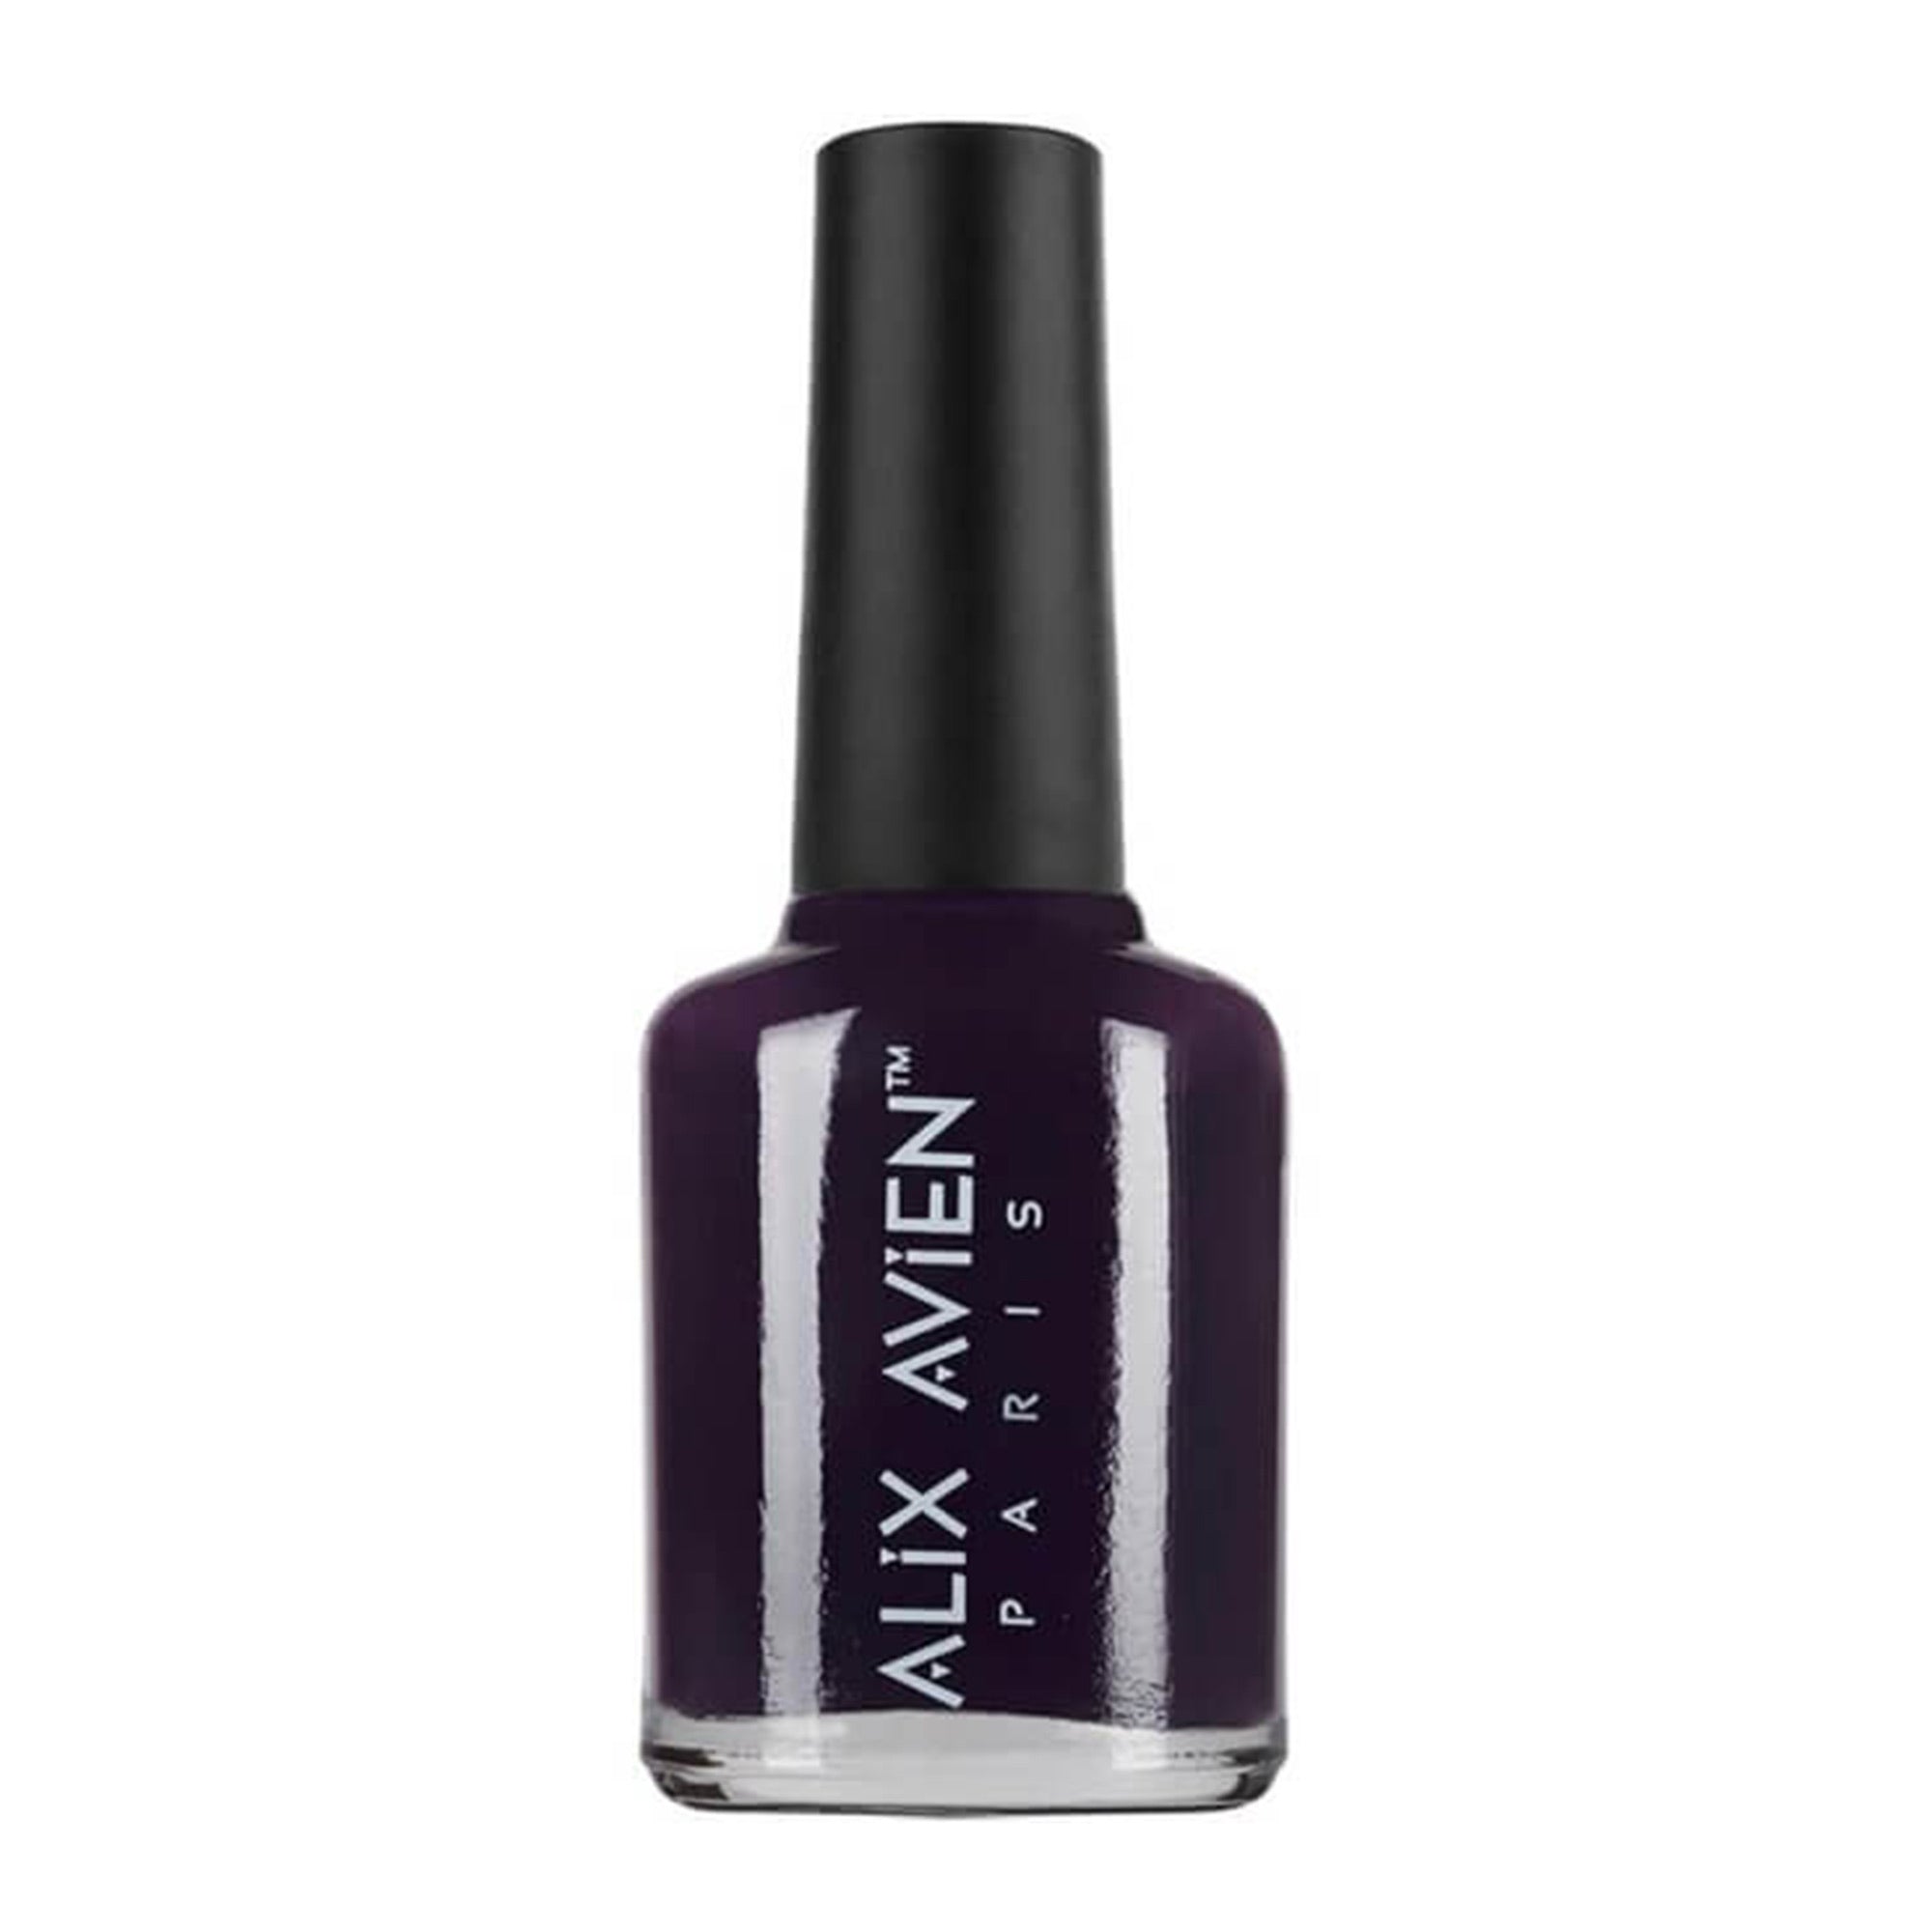 Alix Avien - Nail Polish No.20 (Midnight Purple)